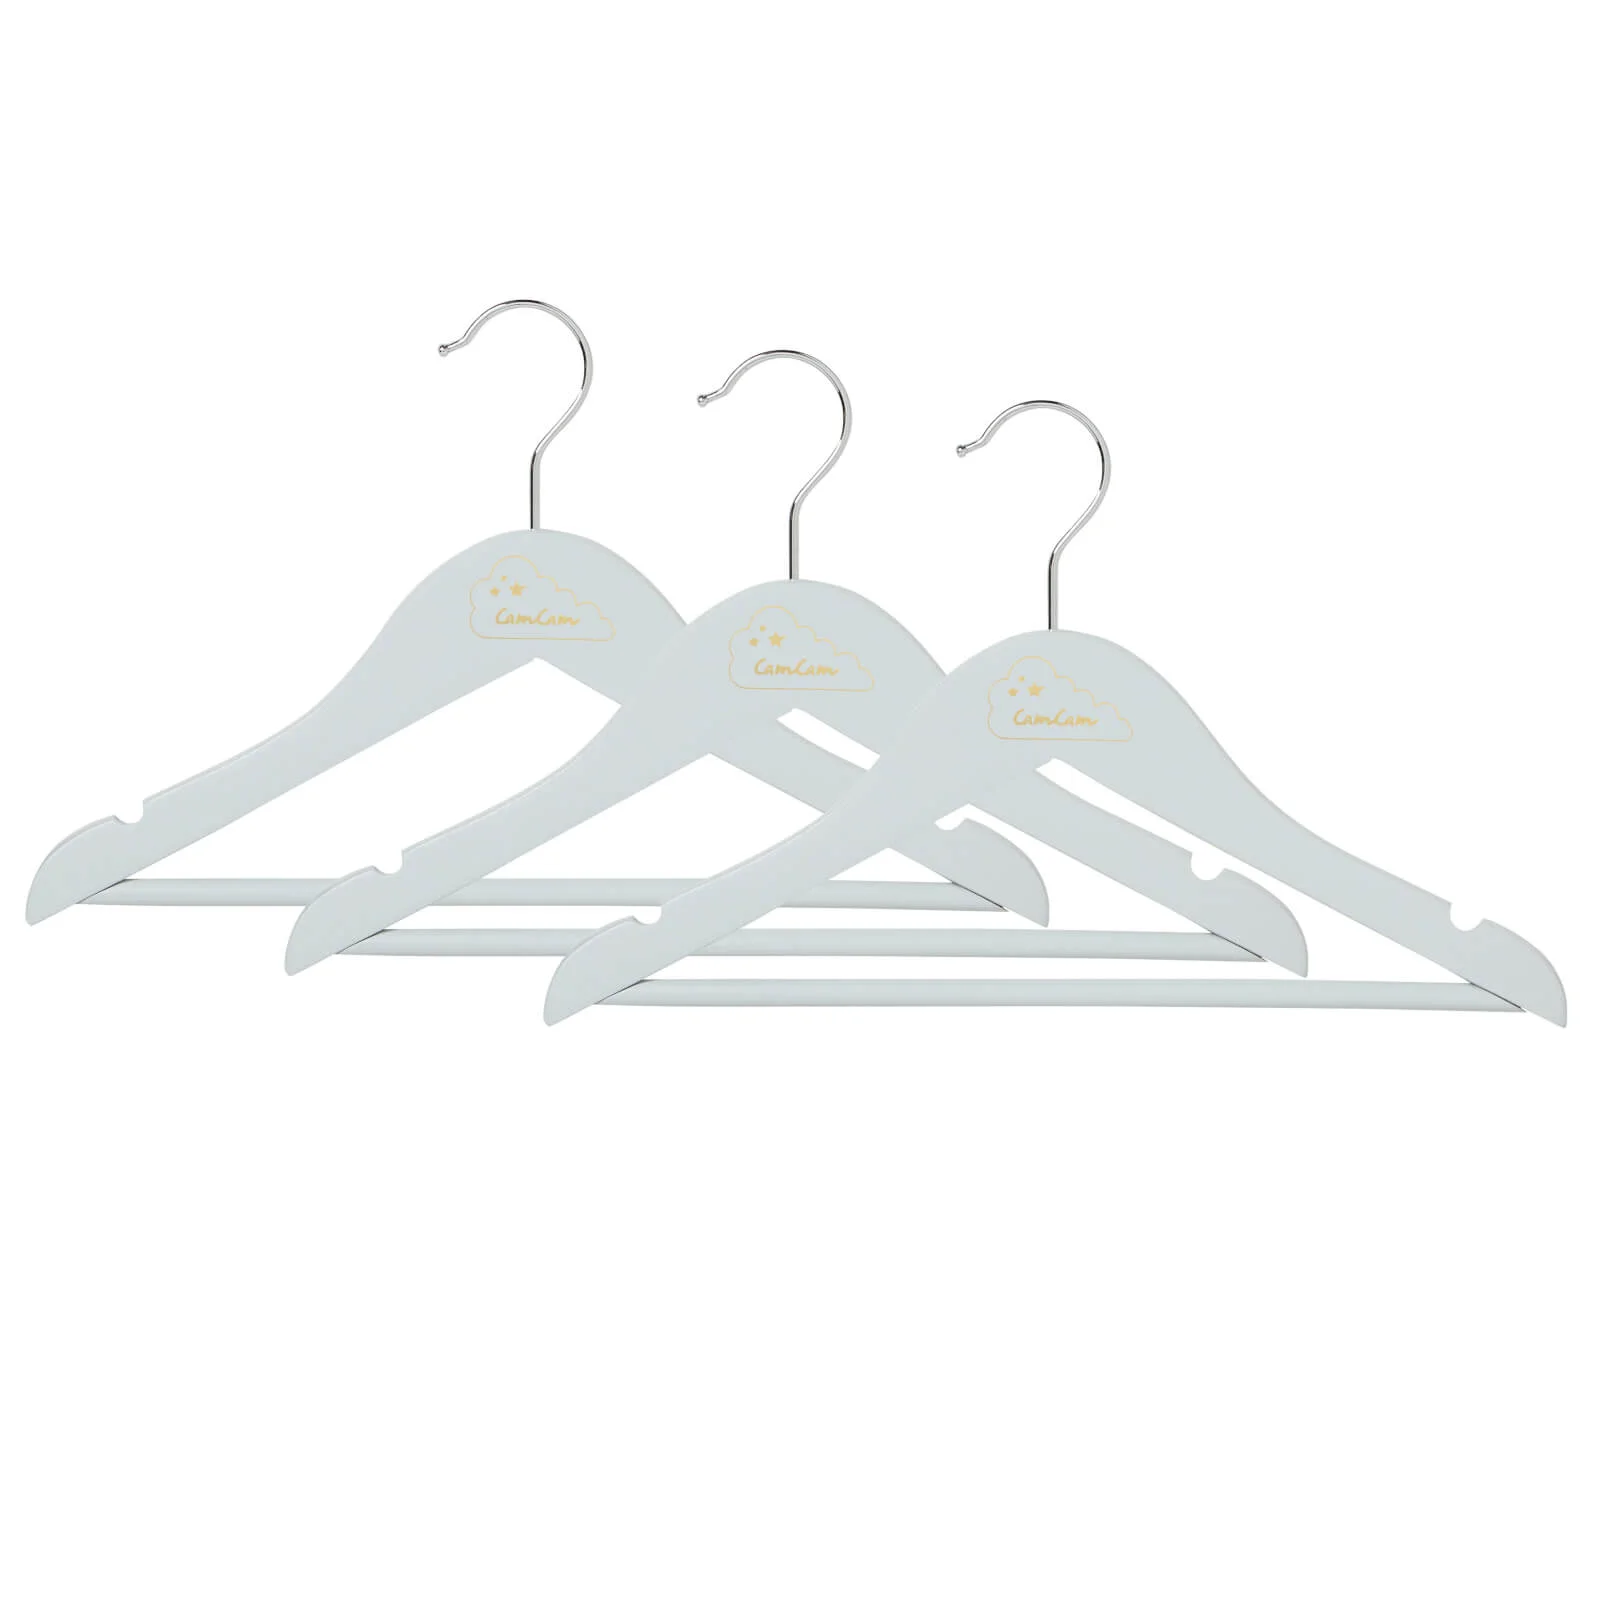 Cam Cam Kids Clothes Hanger - Classic Grey (Set of 3) Image 1